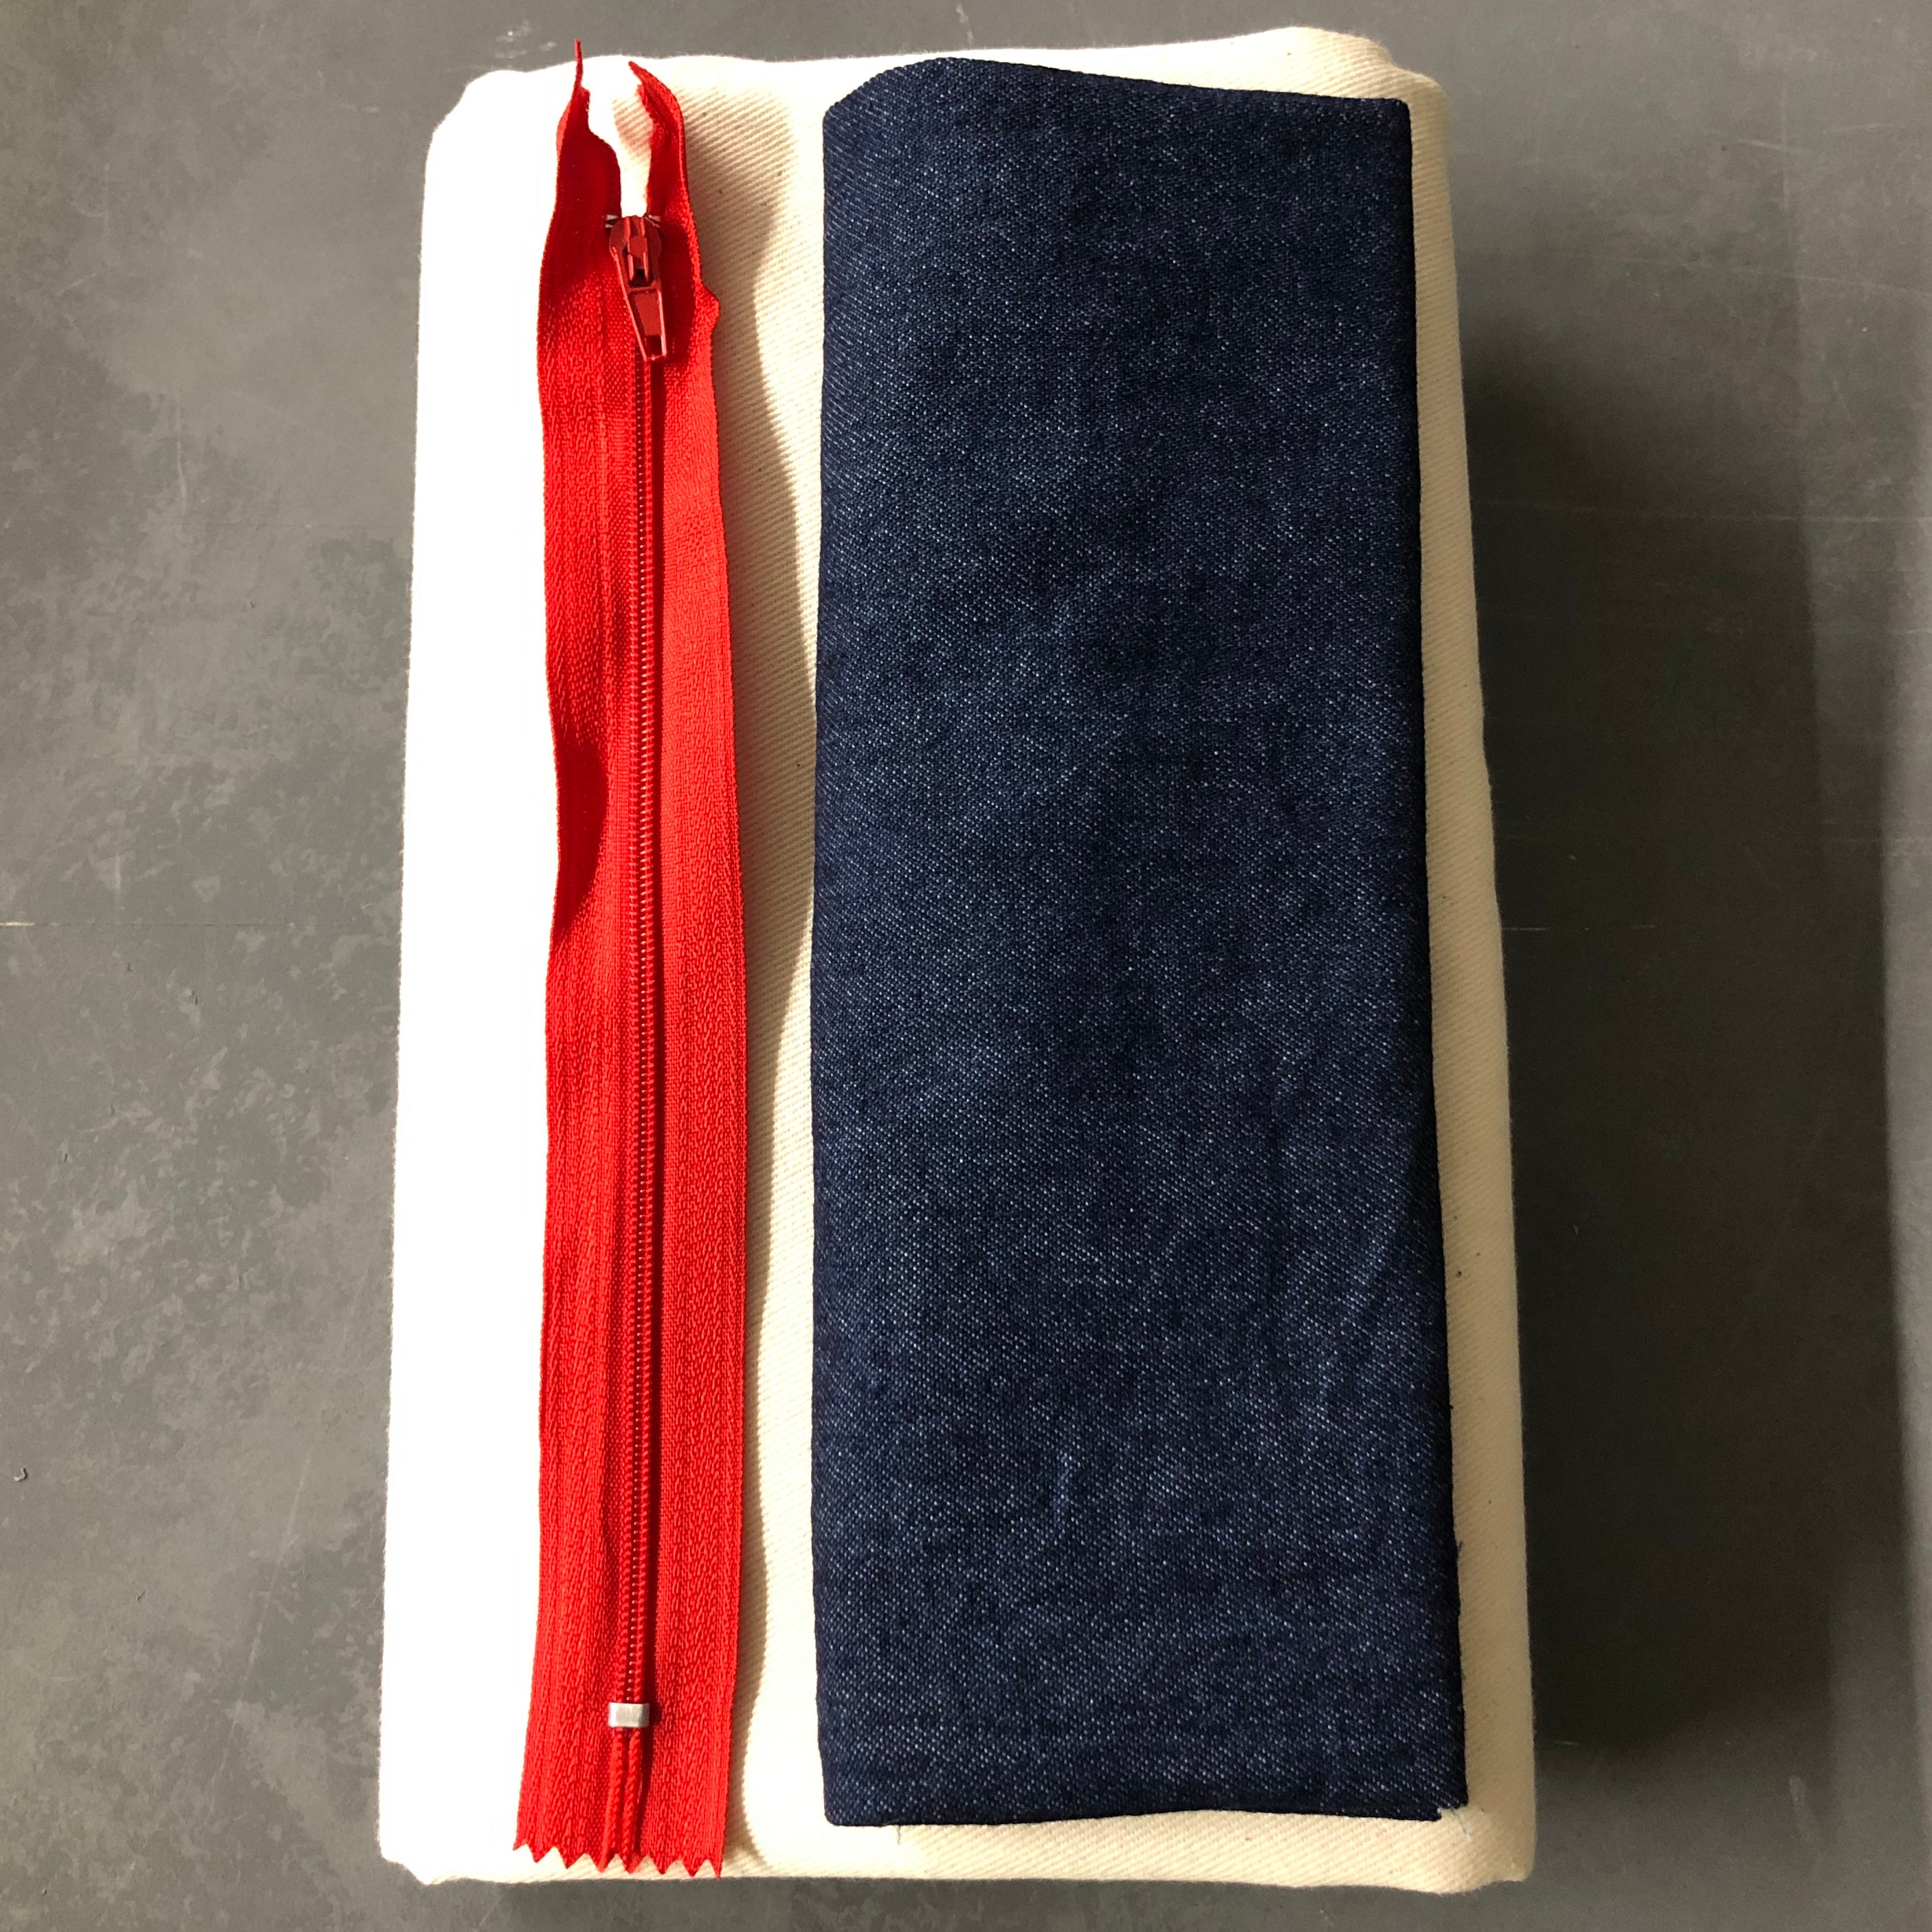 Zippy Bag Refill Kit - Red zip